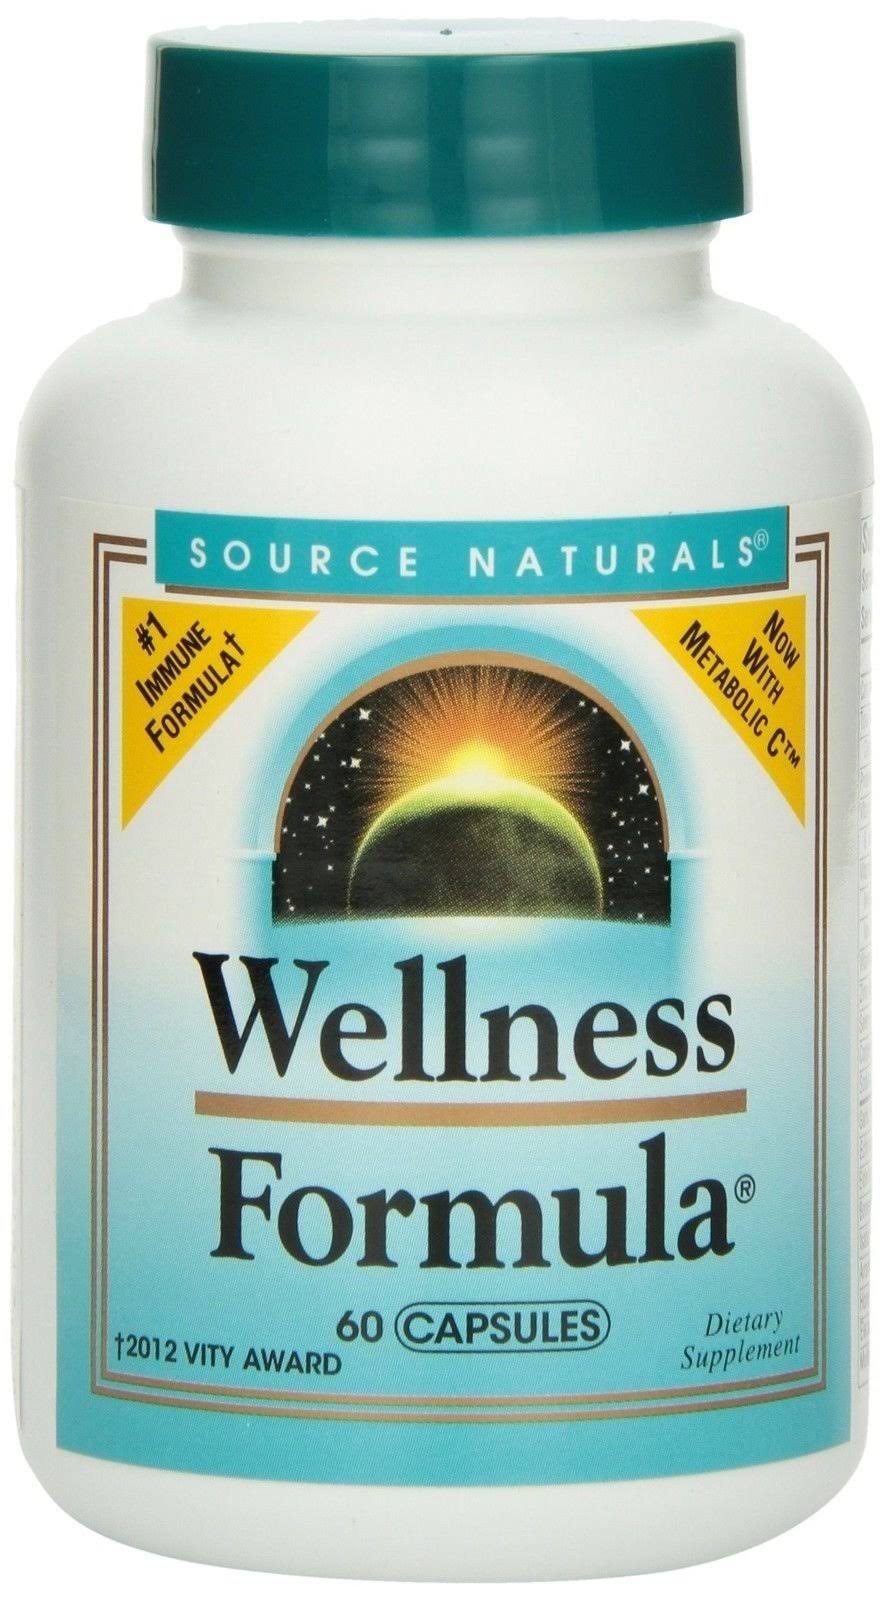 Source Naturals Wellness Formula Dietary Supplement - 60 Capsules